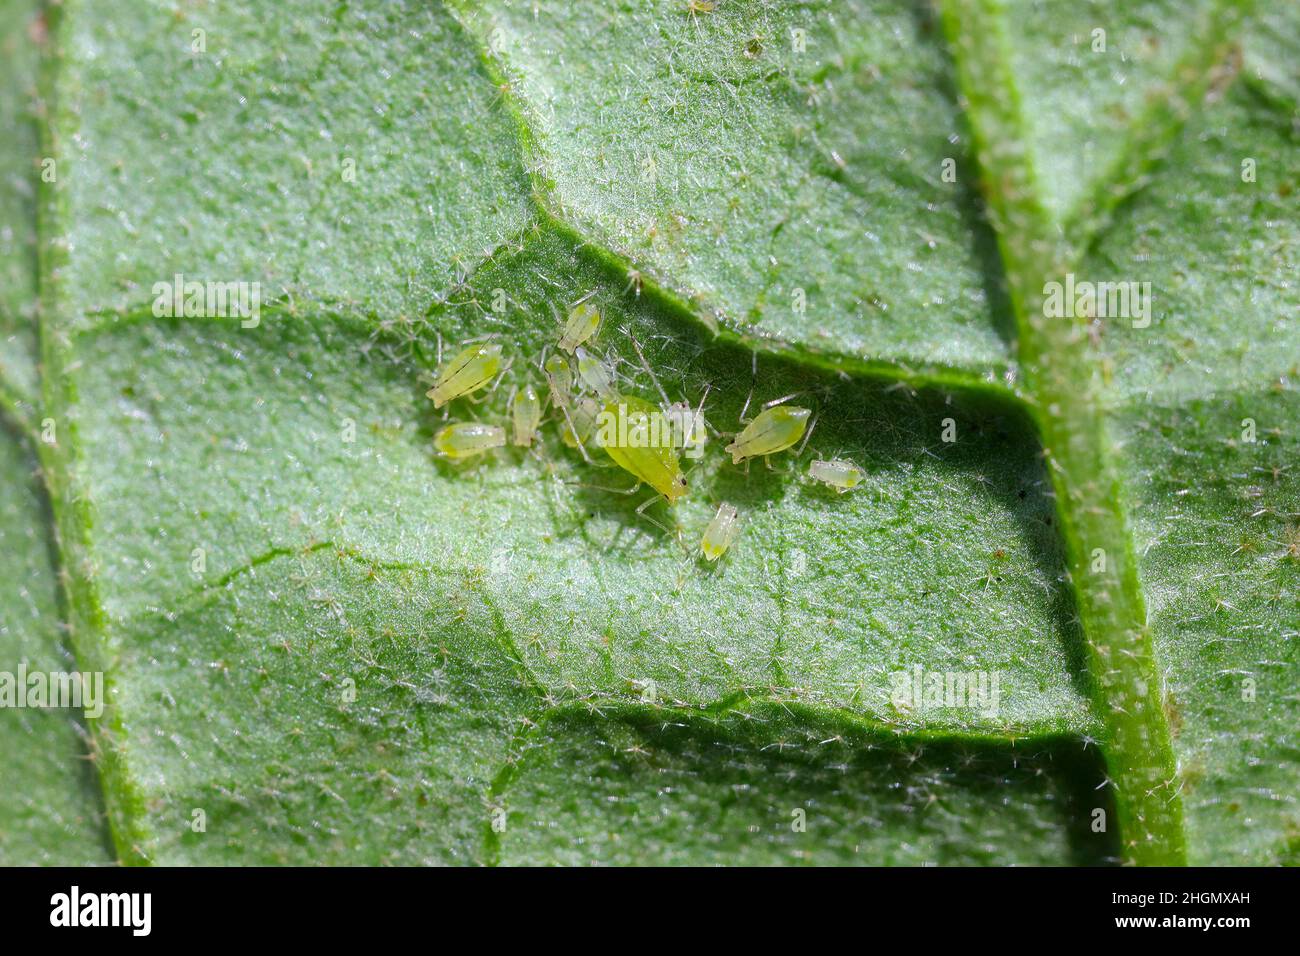 Colony of green potato aphids - Macrosiphum euphorbiae on the underside of an eggplant leaf. Stock Photo